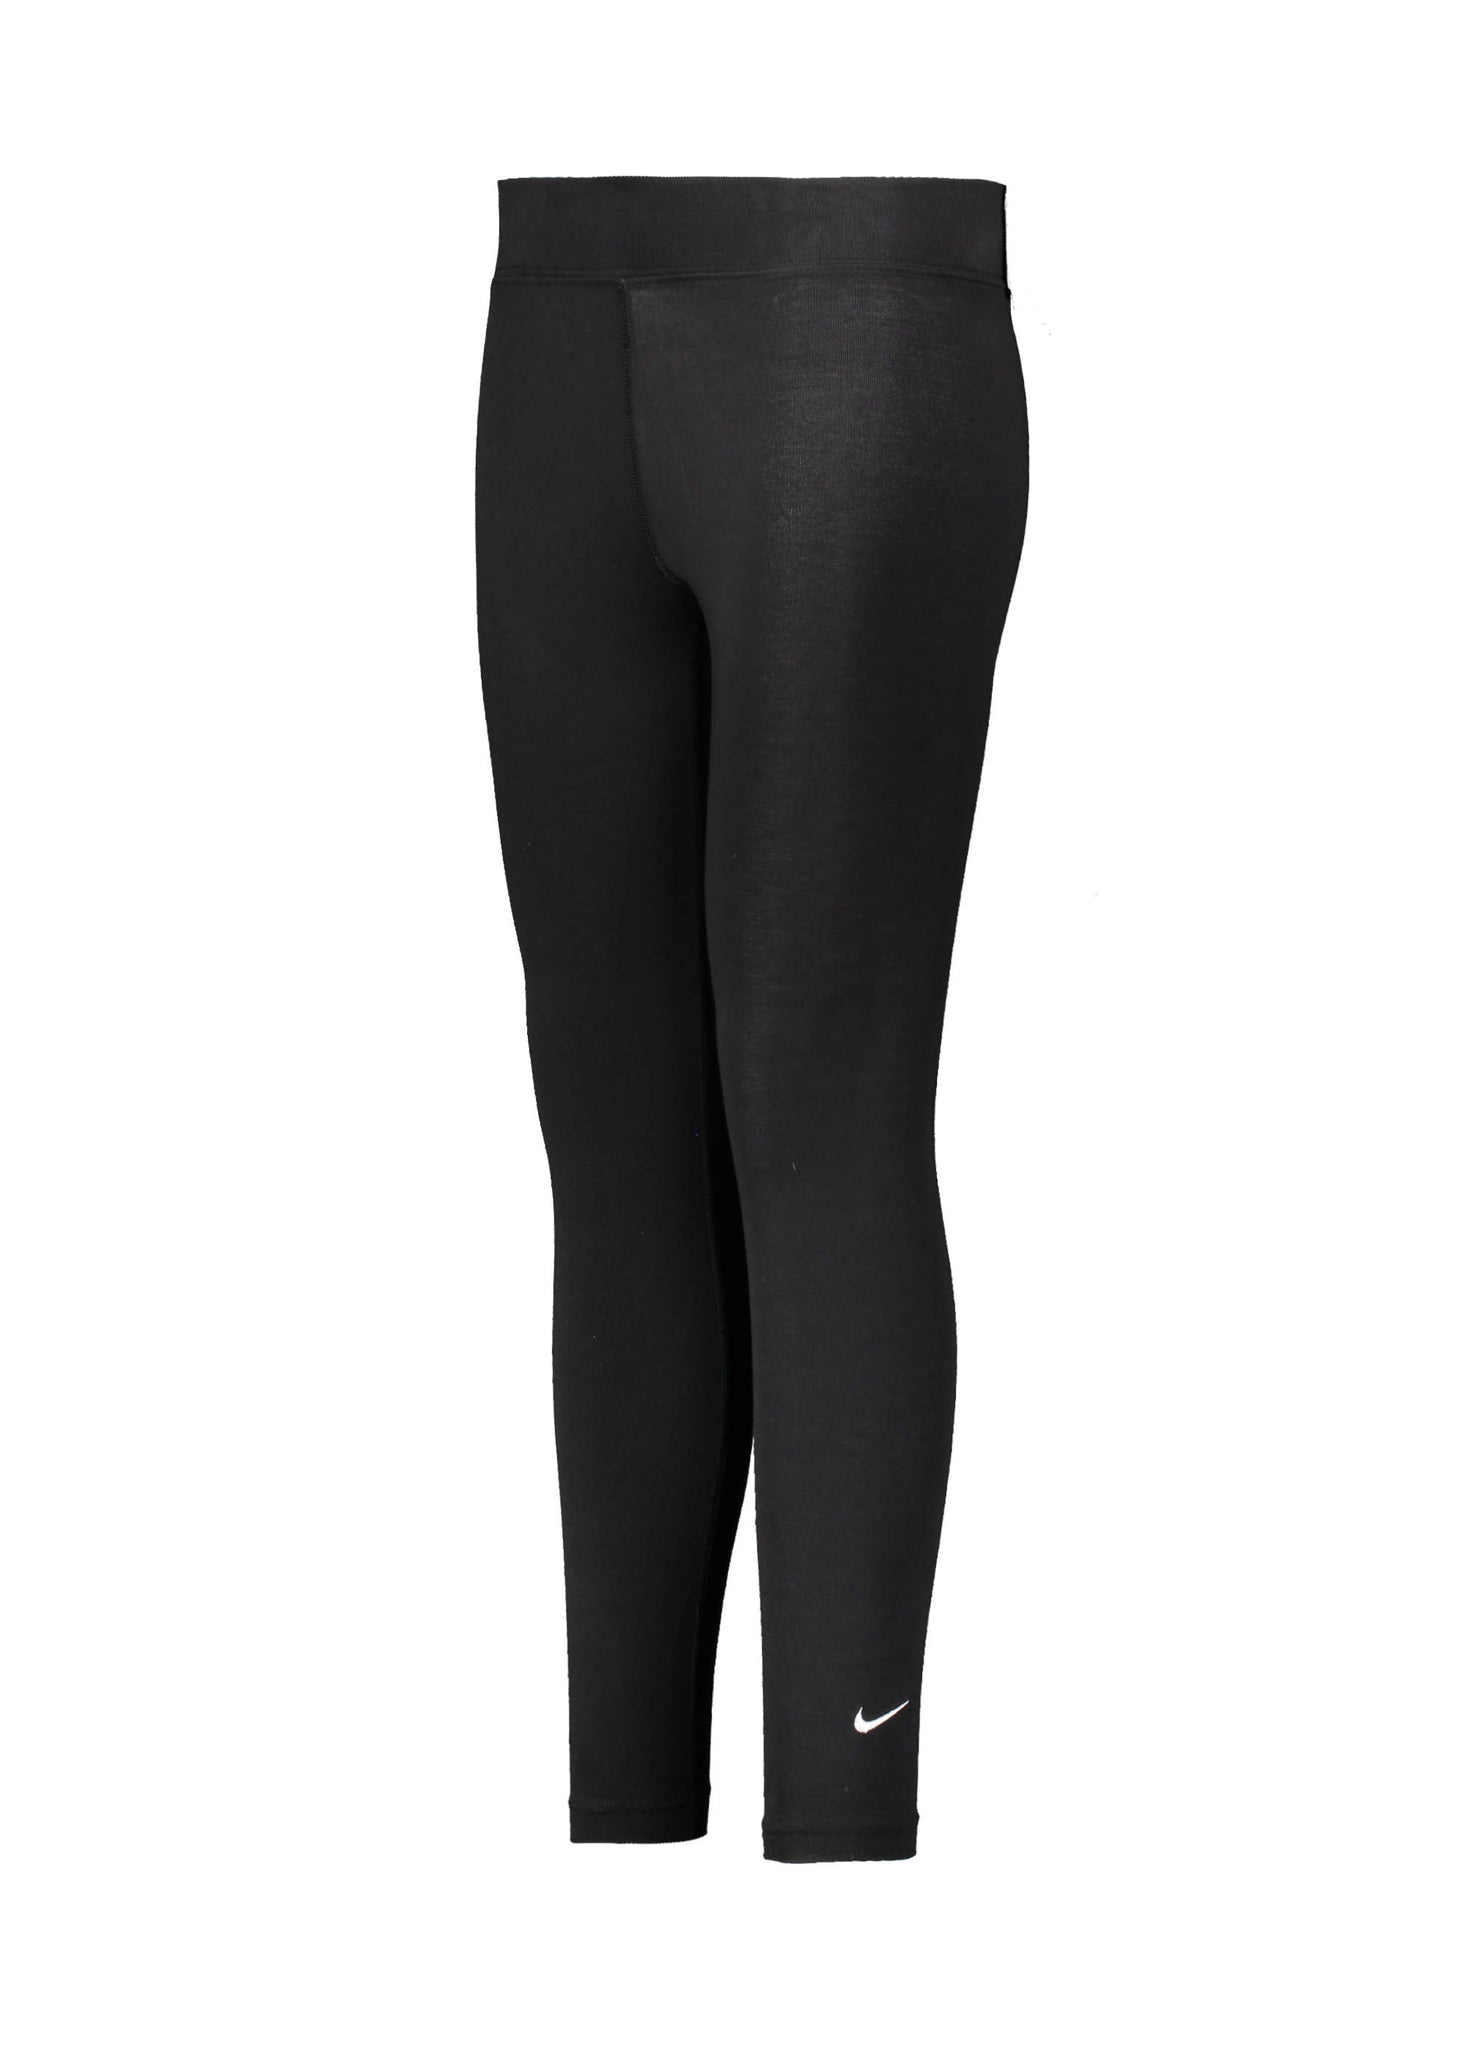 Nike Leggings - Grey or Black